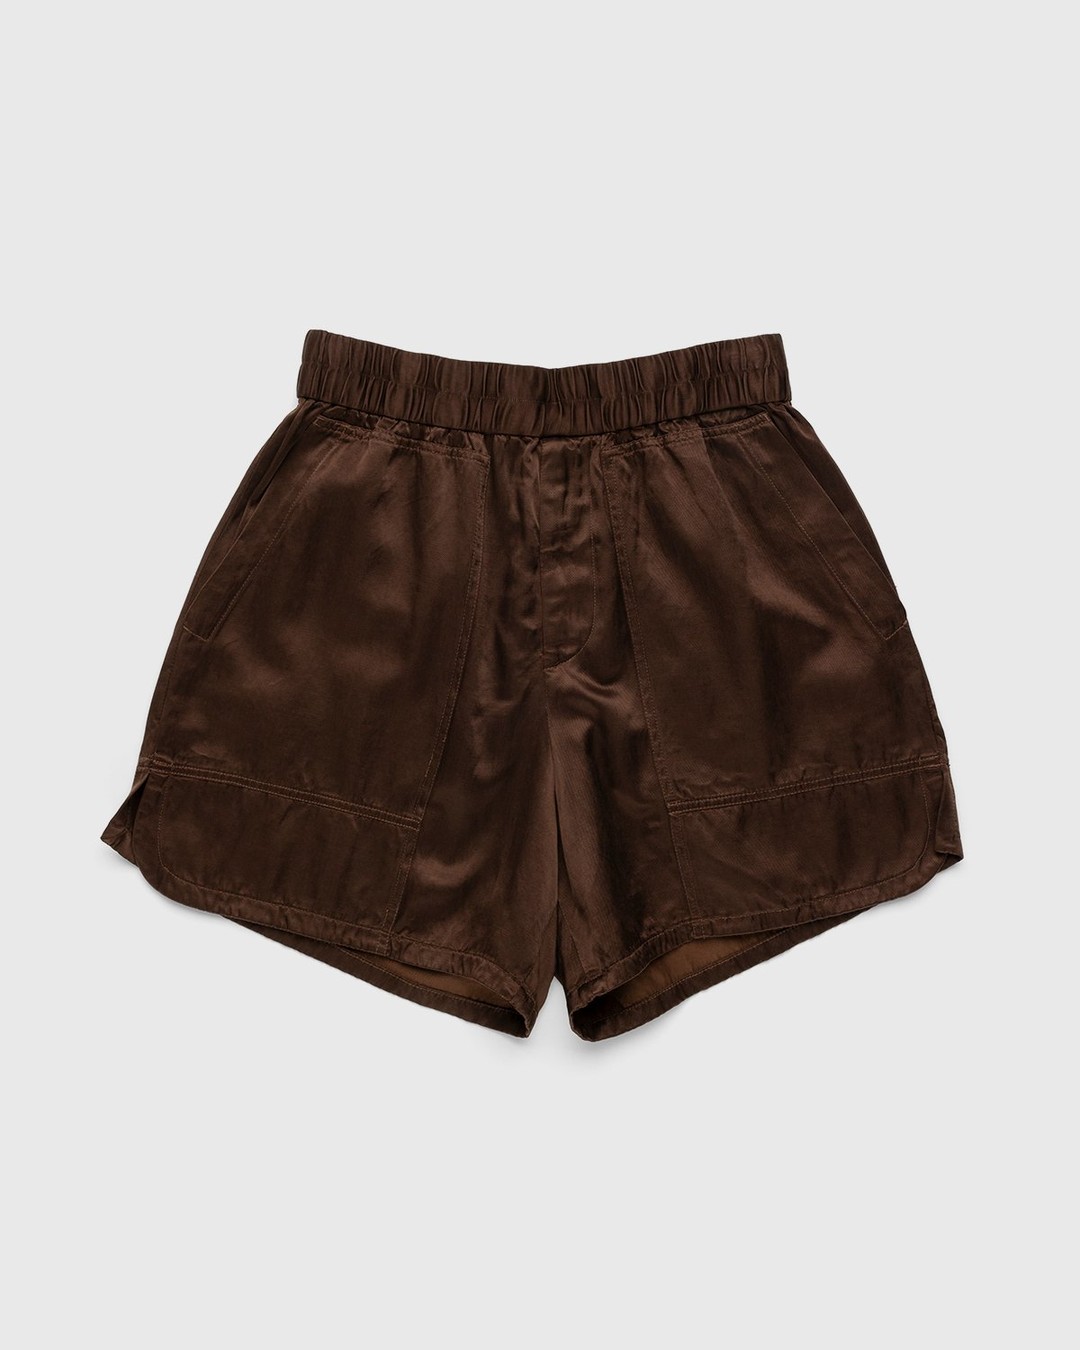 Dries van Noten – Pooles Shorts Brown - Shorts - Brown - Image 1